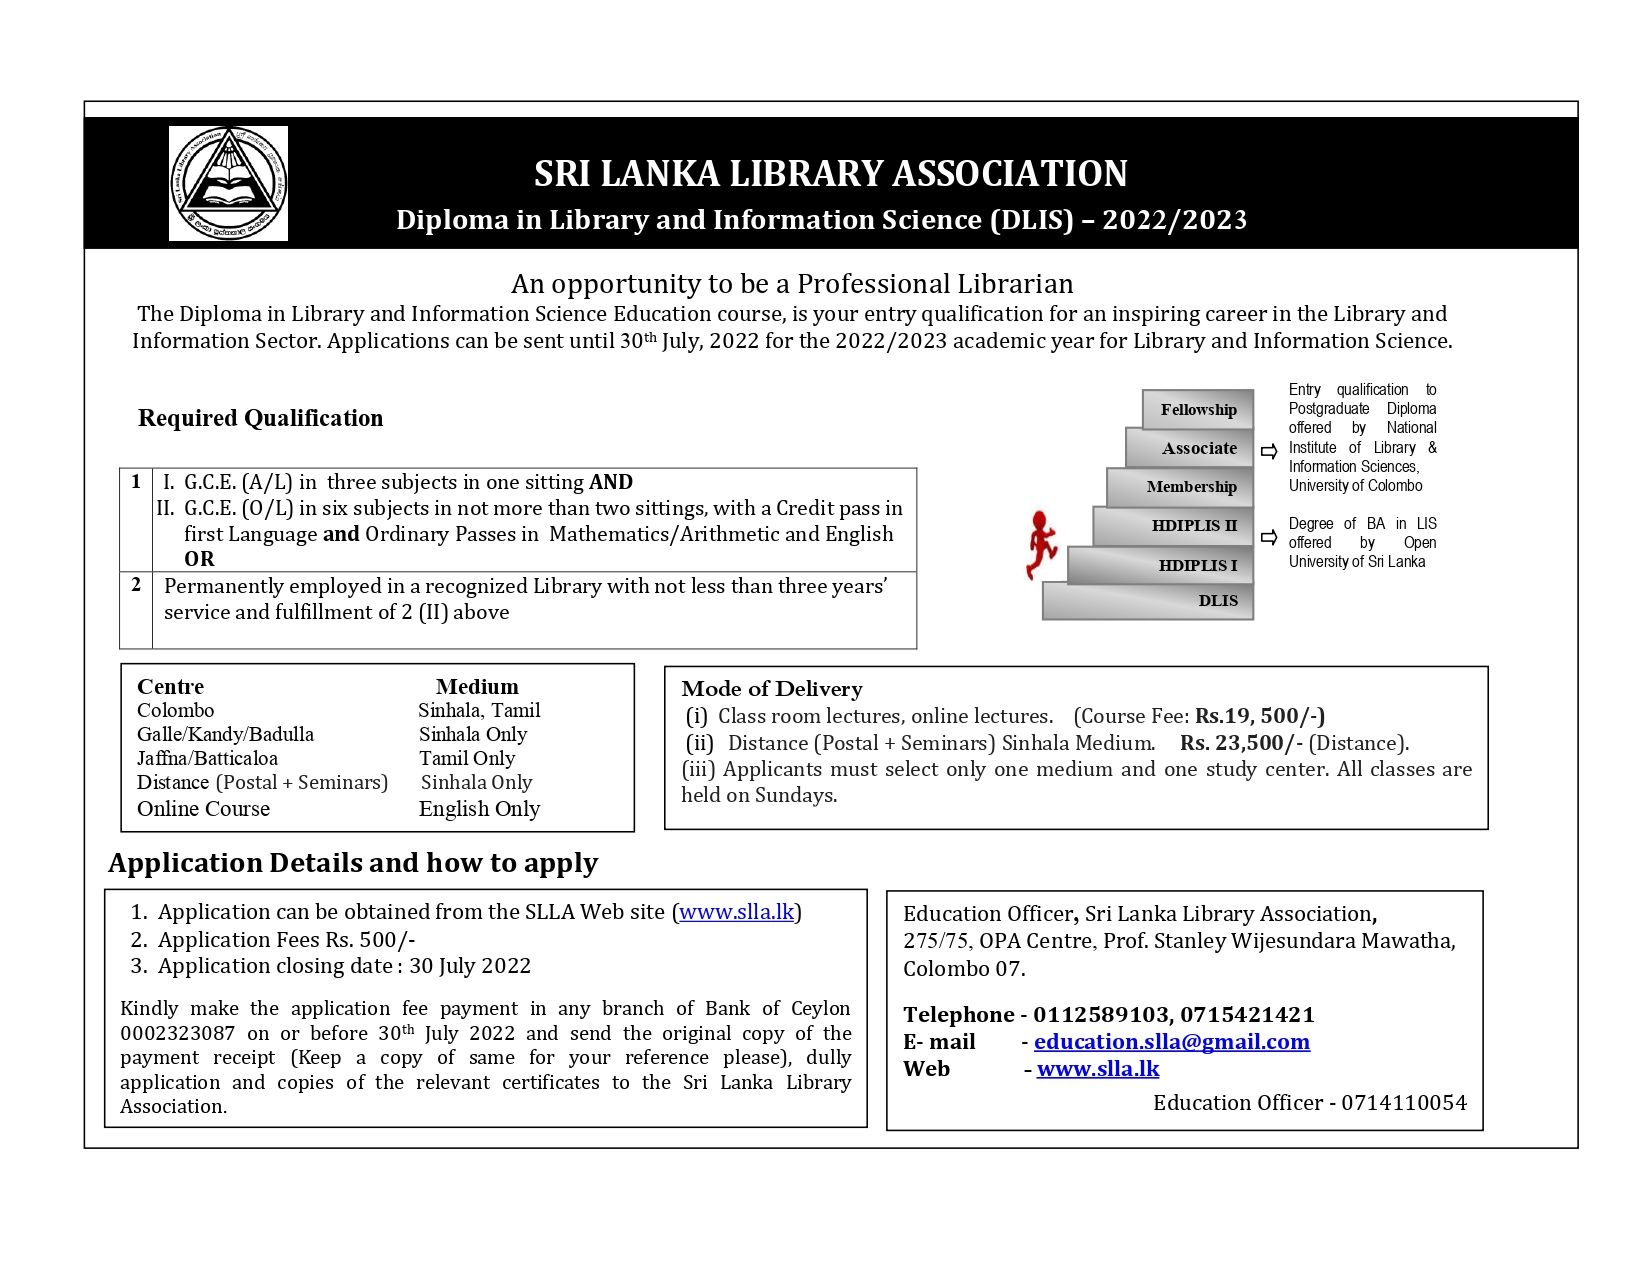 Sri Lanka Library Association Diploma Application 2023